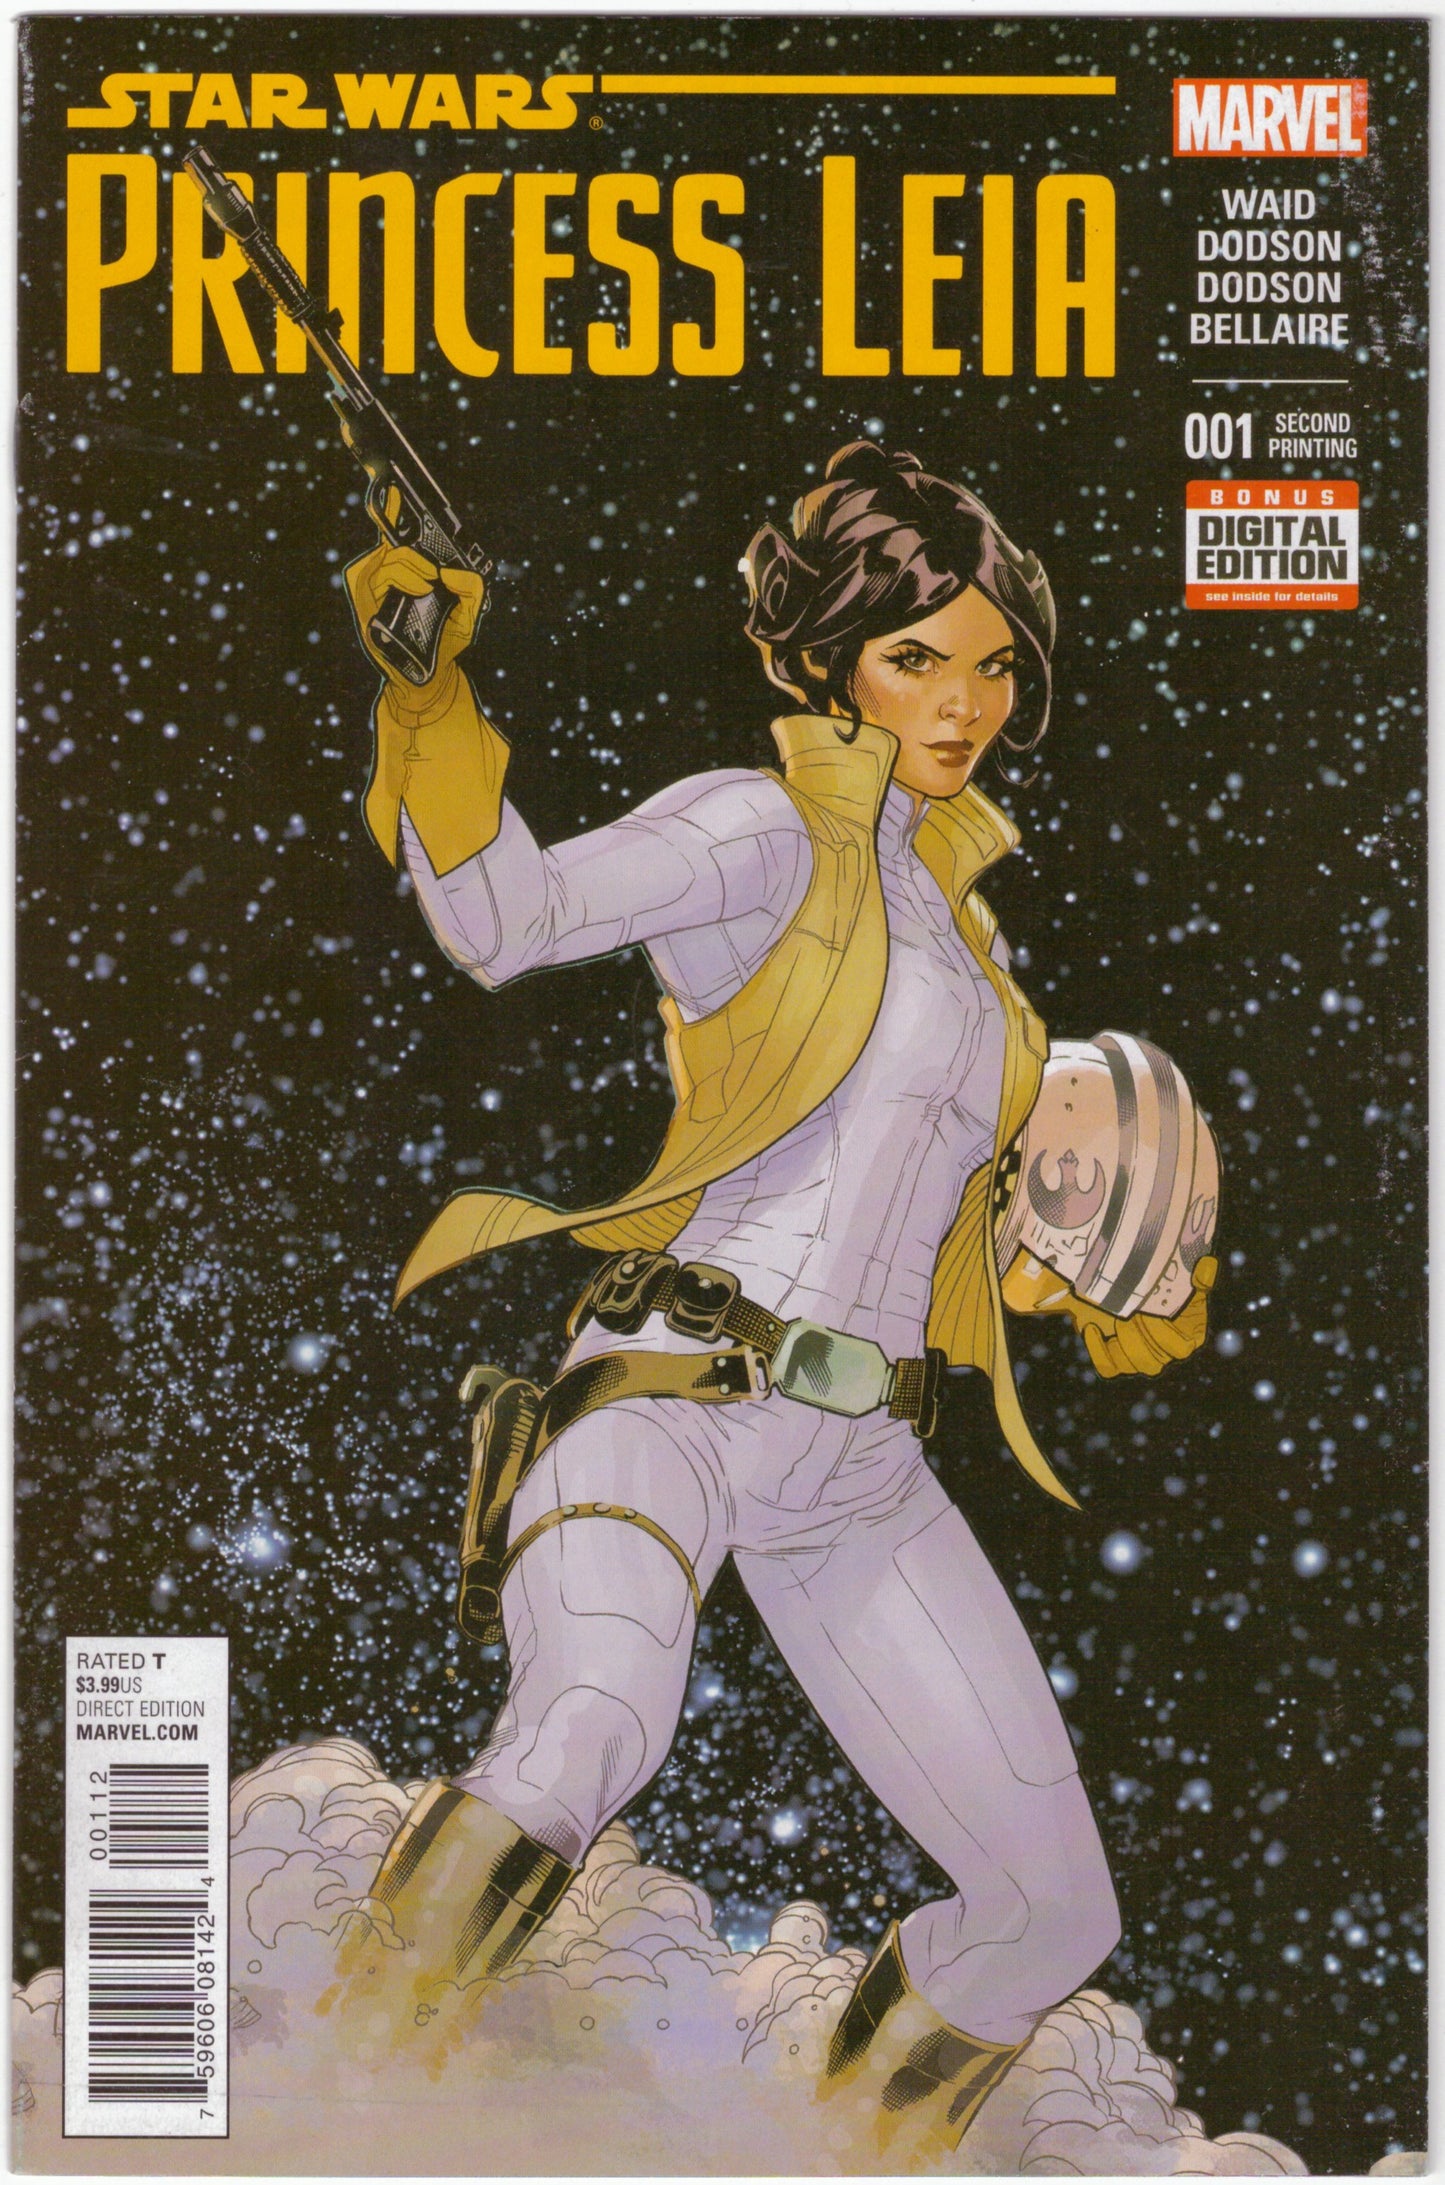 Star Wars: Princess Leia #1 - 2nd Print